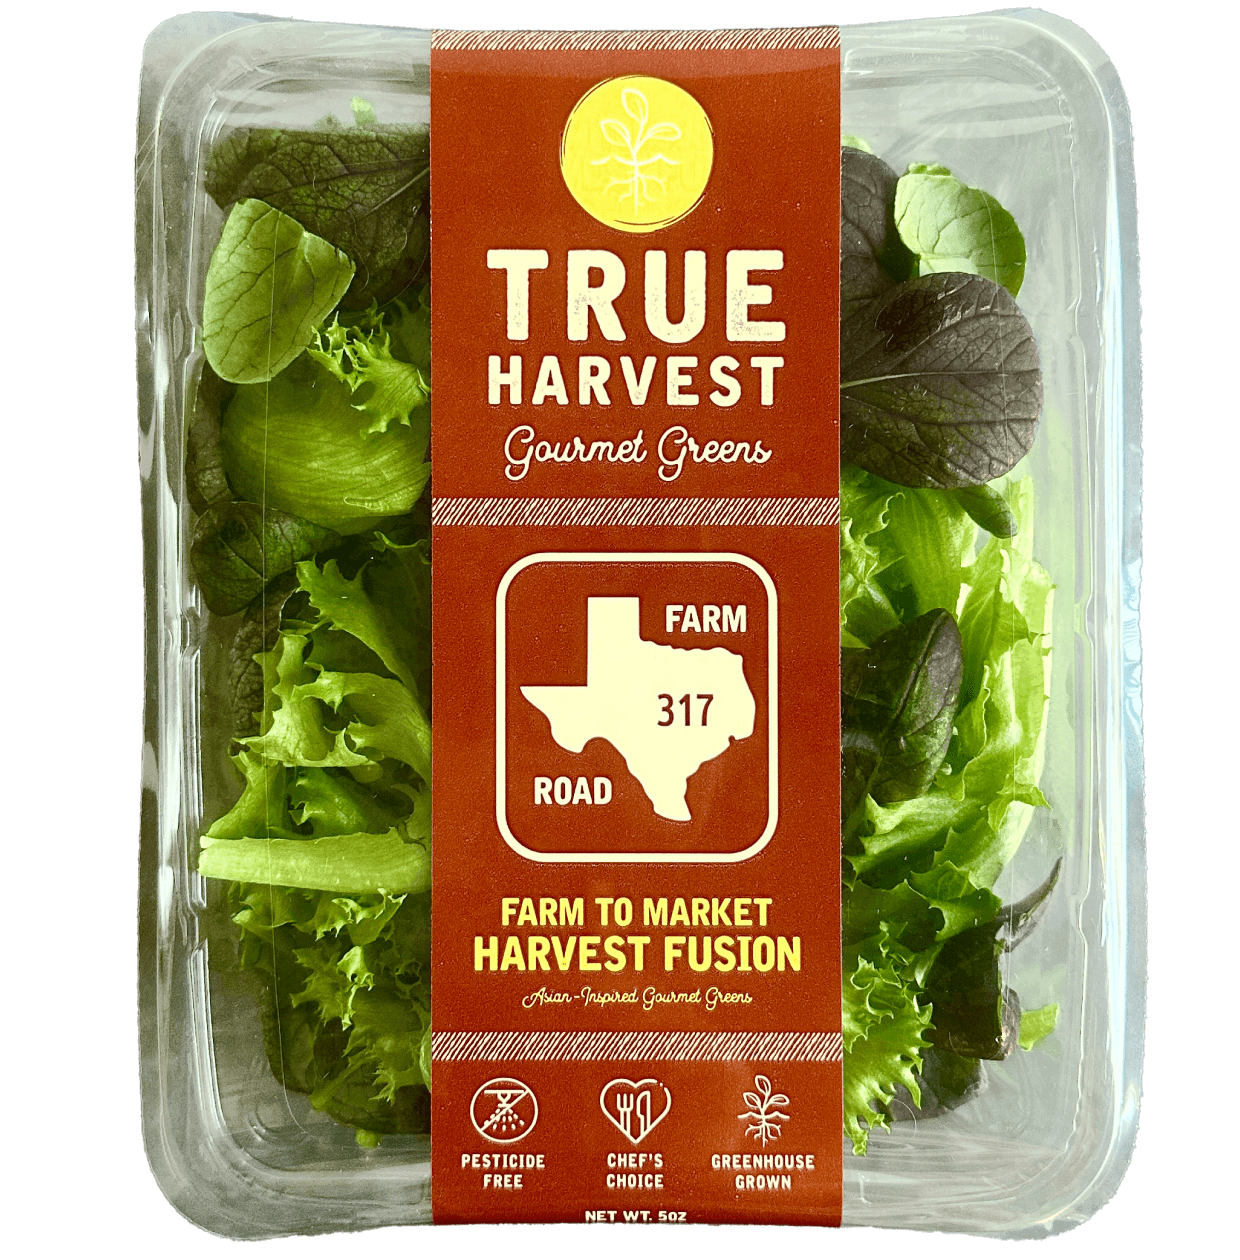 TrueHarvest Farms gourmet greens farm to market Harvest Fusion clamshell packaging